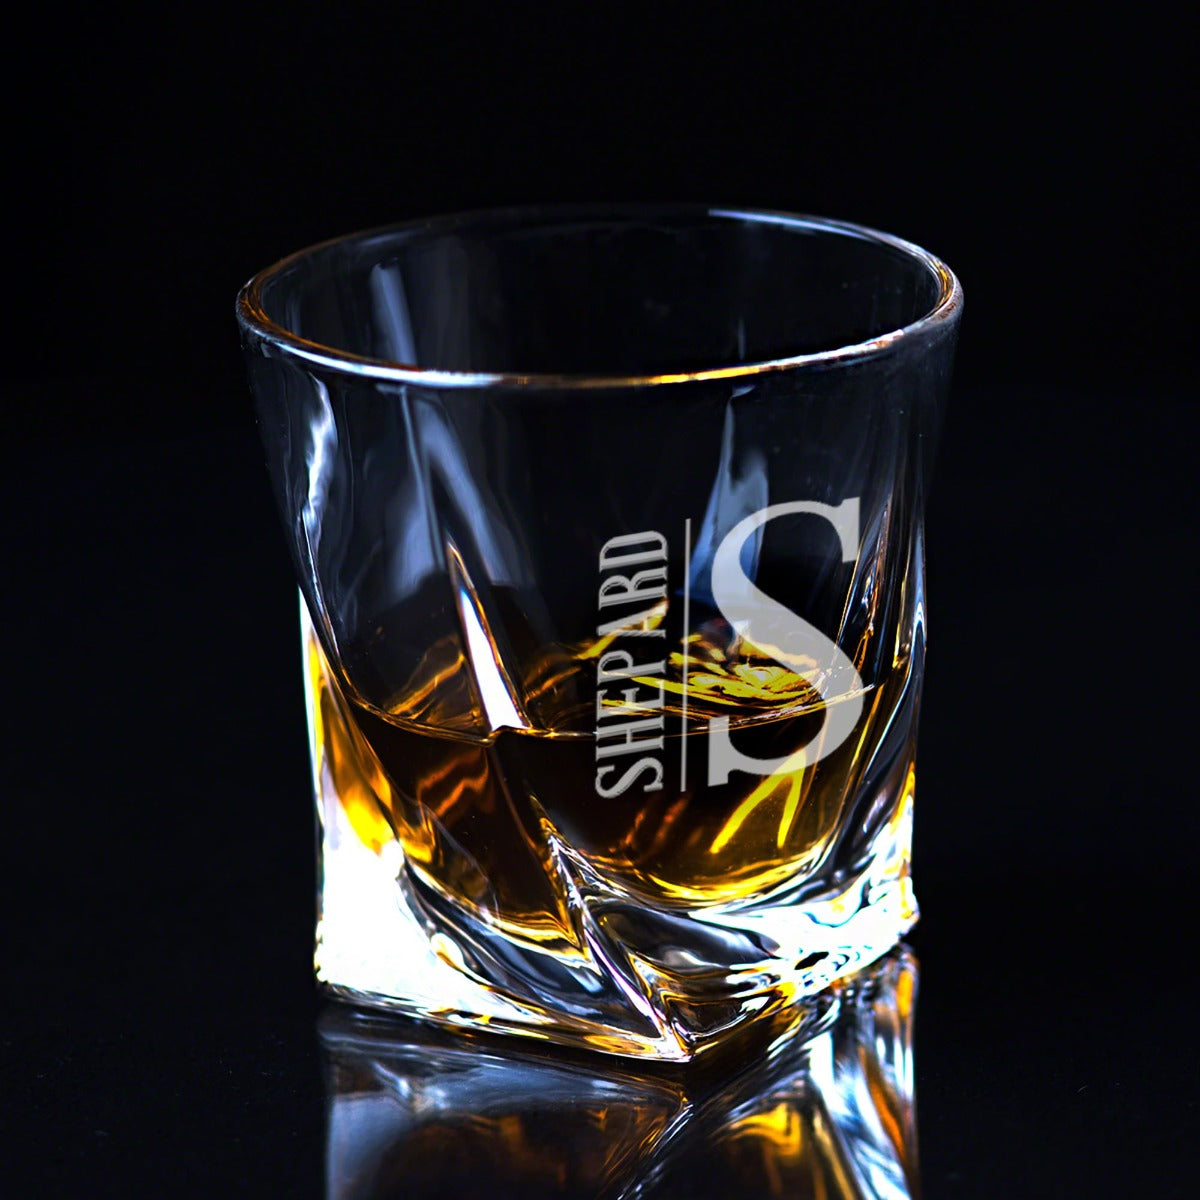 Twist Custom Whiskey Gift Set with Snacks & Treats - Black Ebony Gift Box 11pc